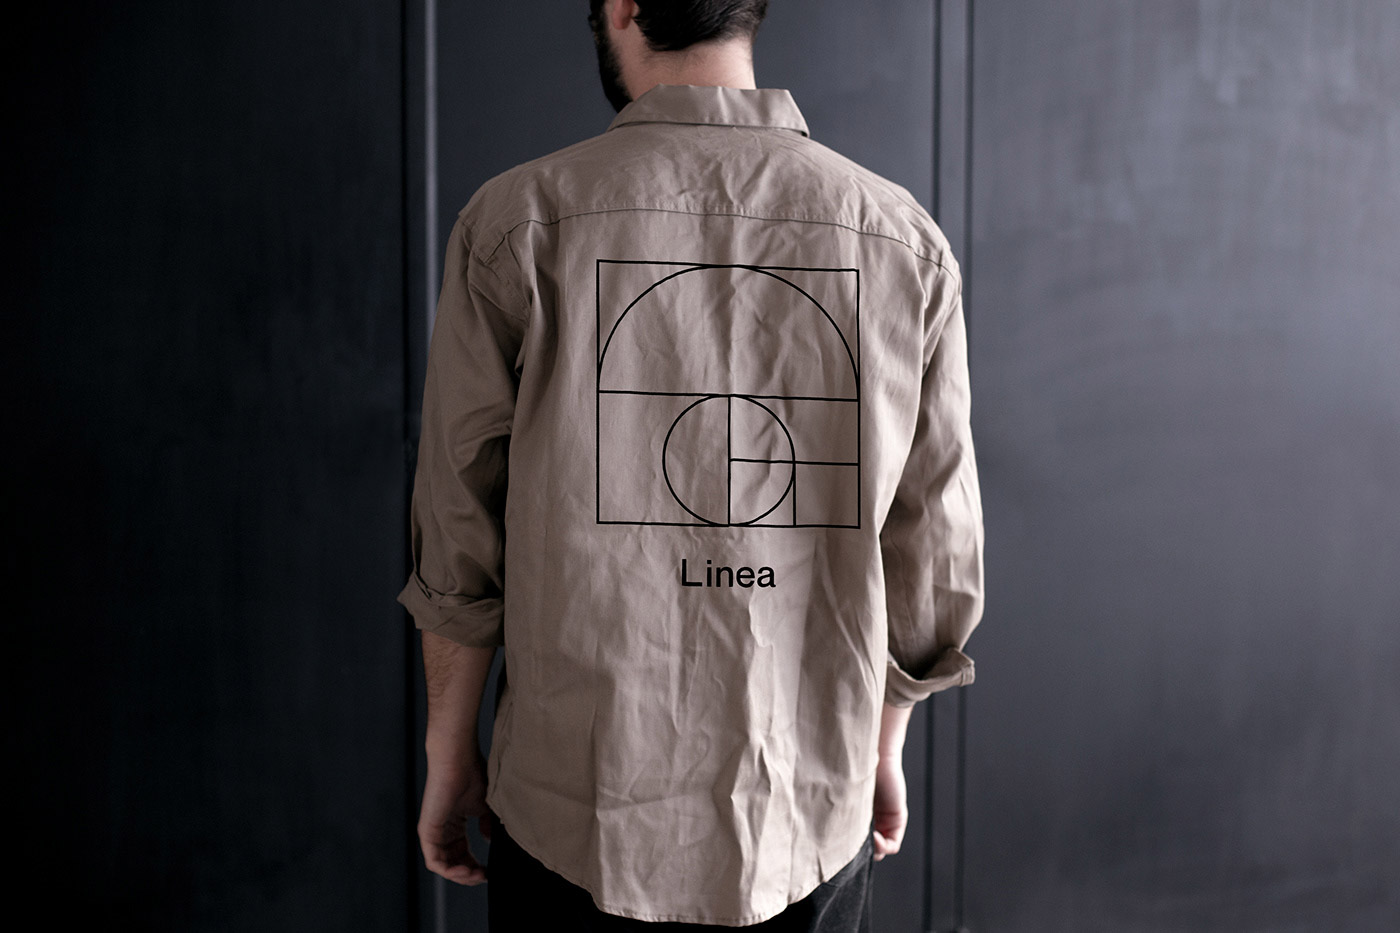 Linea branding by Un Barco